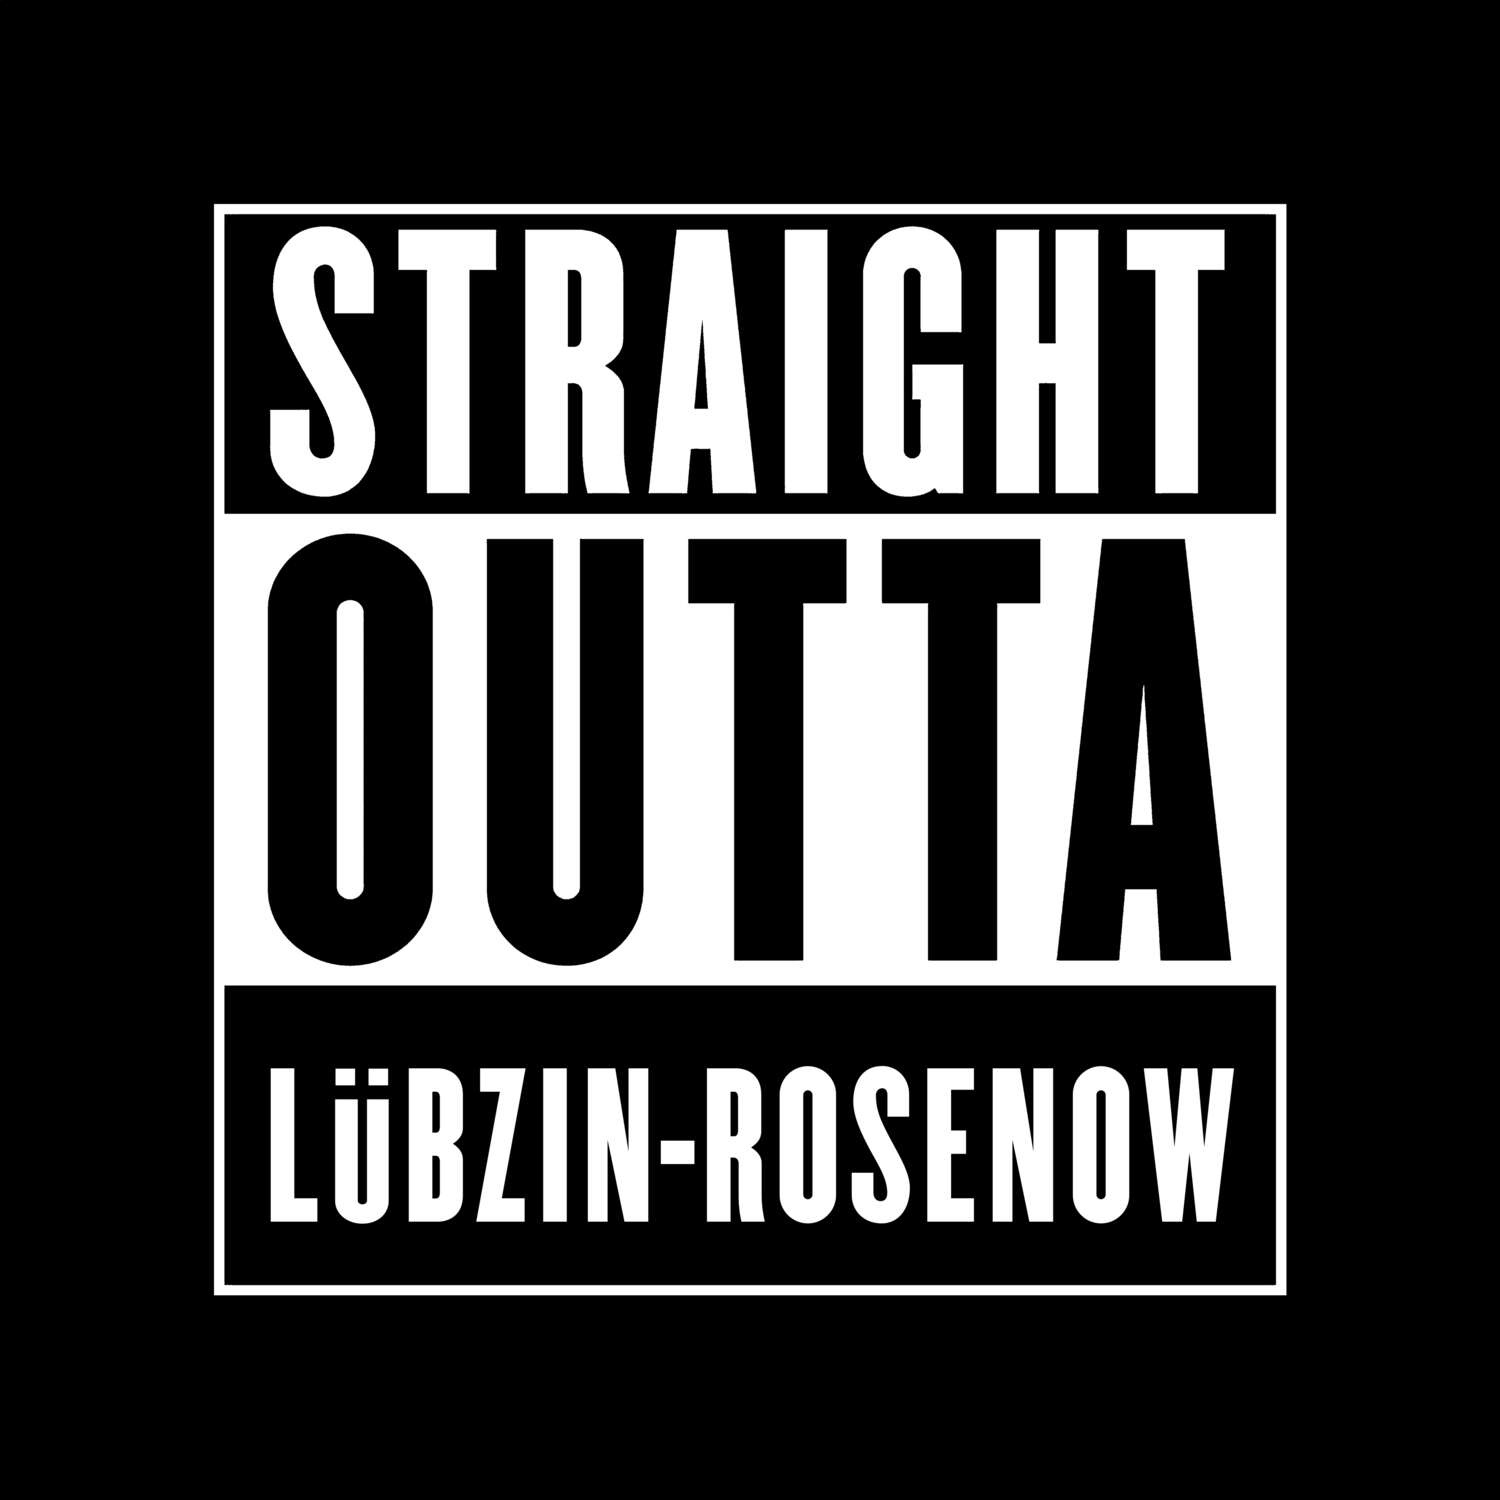 Lübzin-Rosenow T-Shirt »Straight Outta«